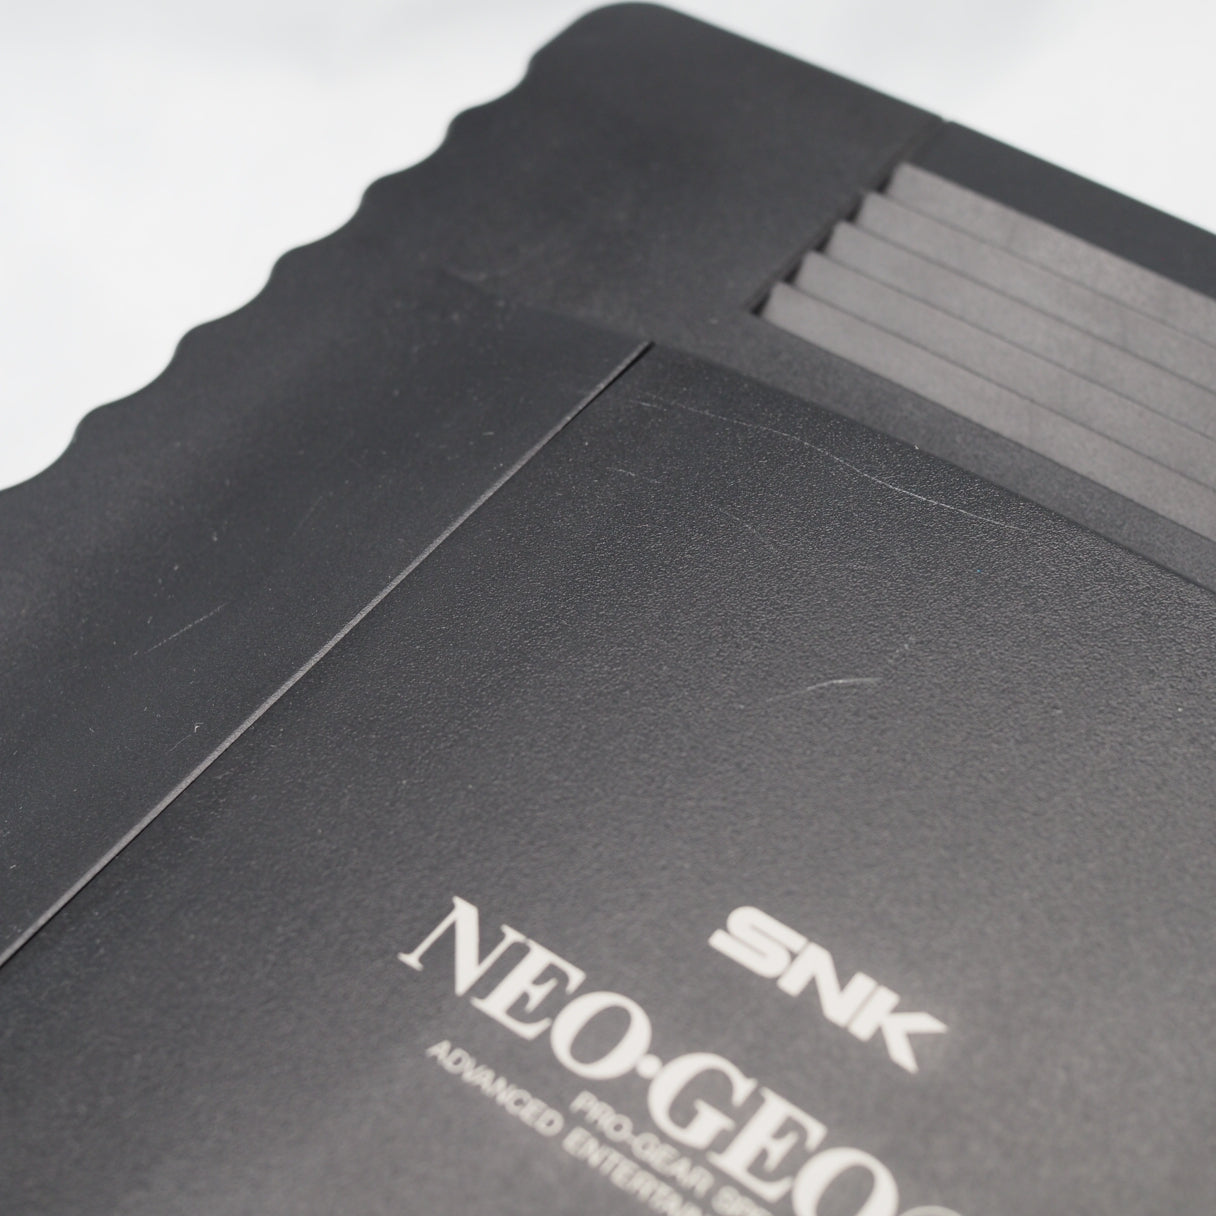 NEO GEO CD Console System & Combat Stick Controller SET